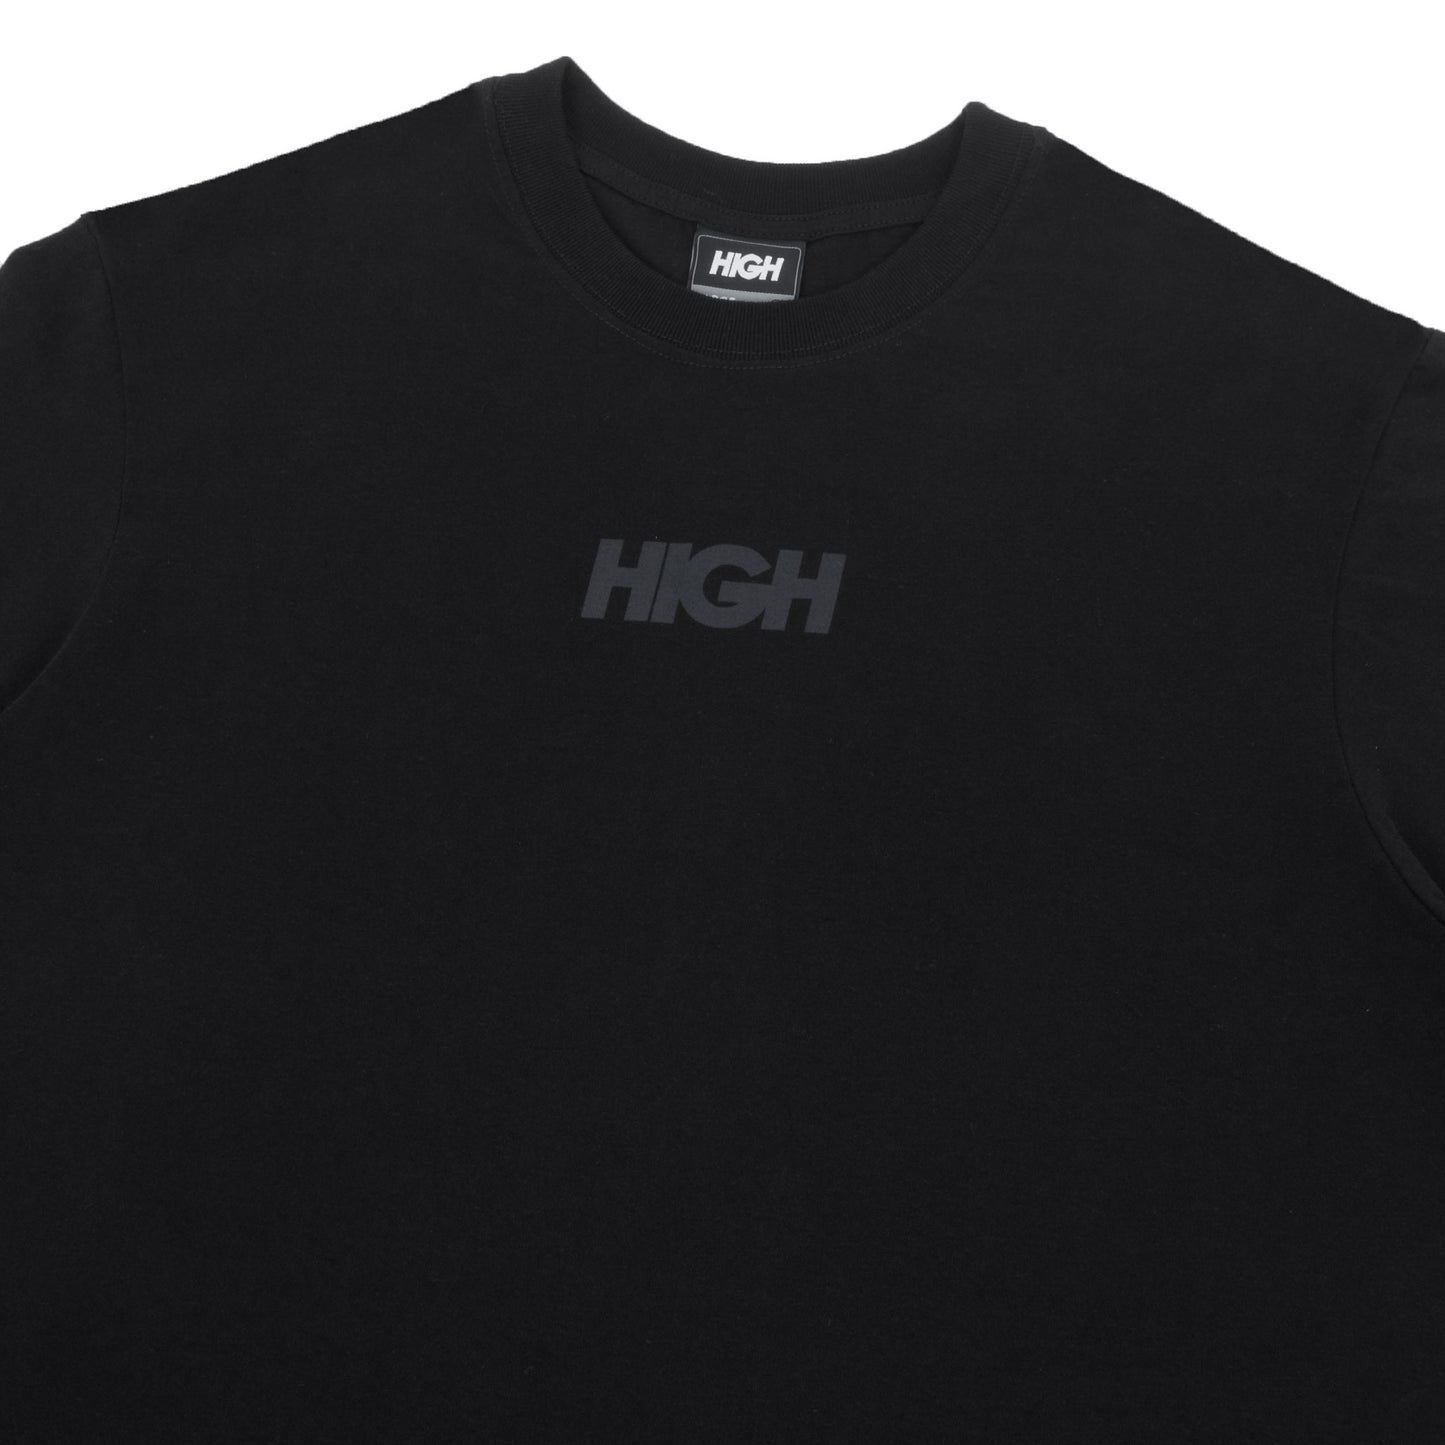 High Company Tee Tonal Logo Black